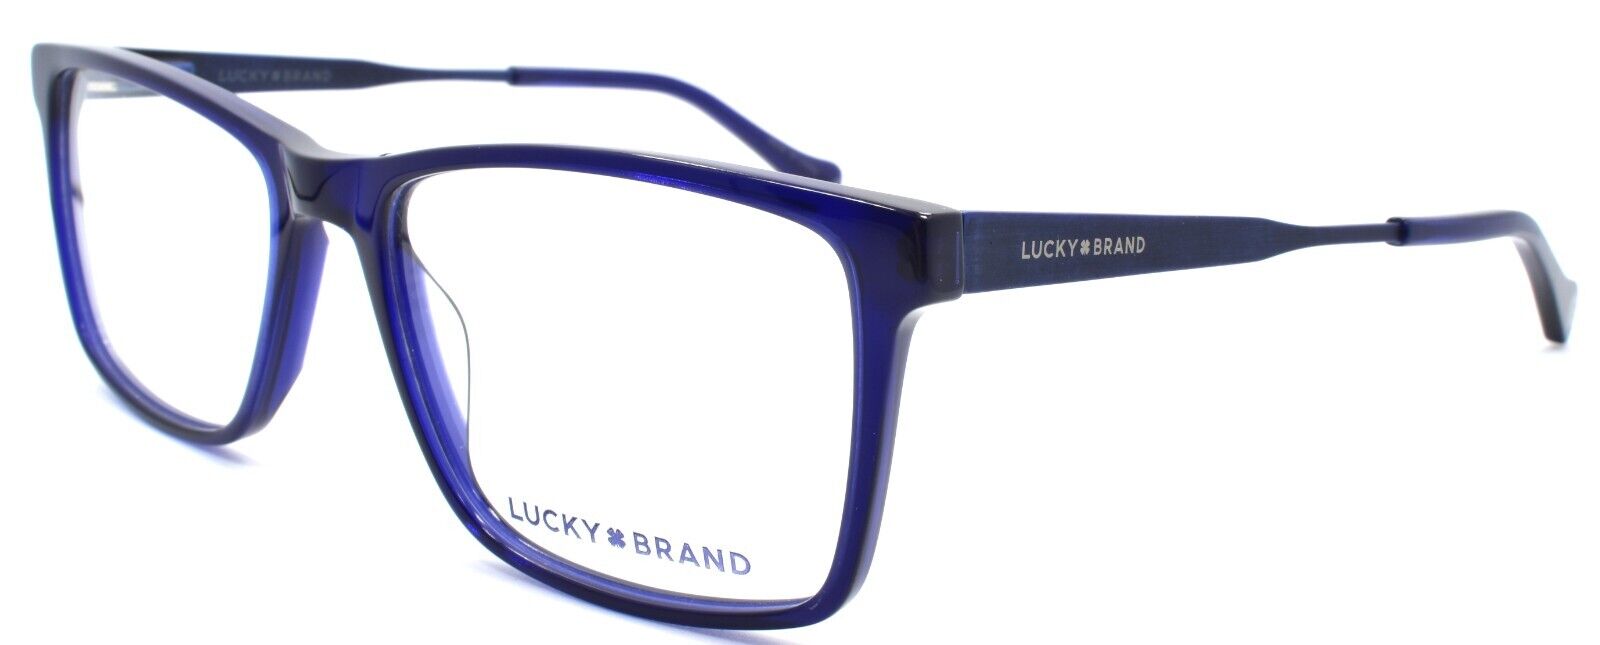 1-LUCKY BRAND D409 Men's Eyeglasses Frames 56-18-145 Navy-751286323351-IKSpecs